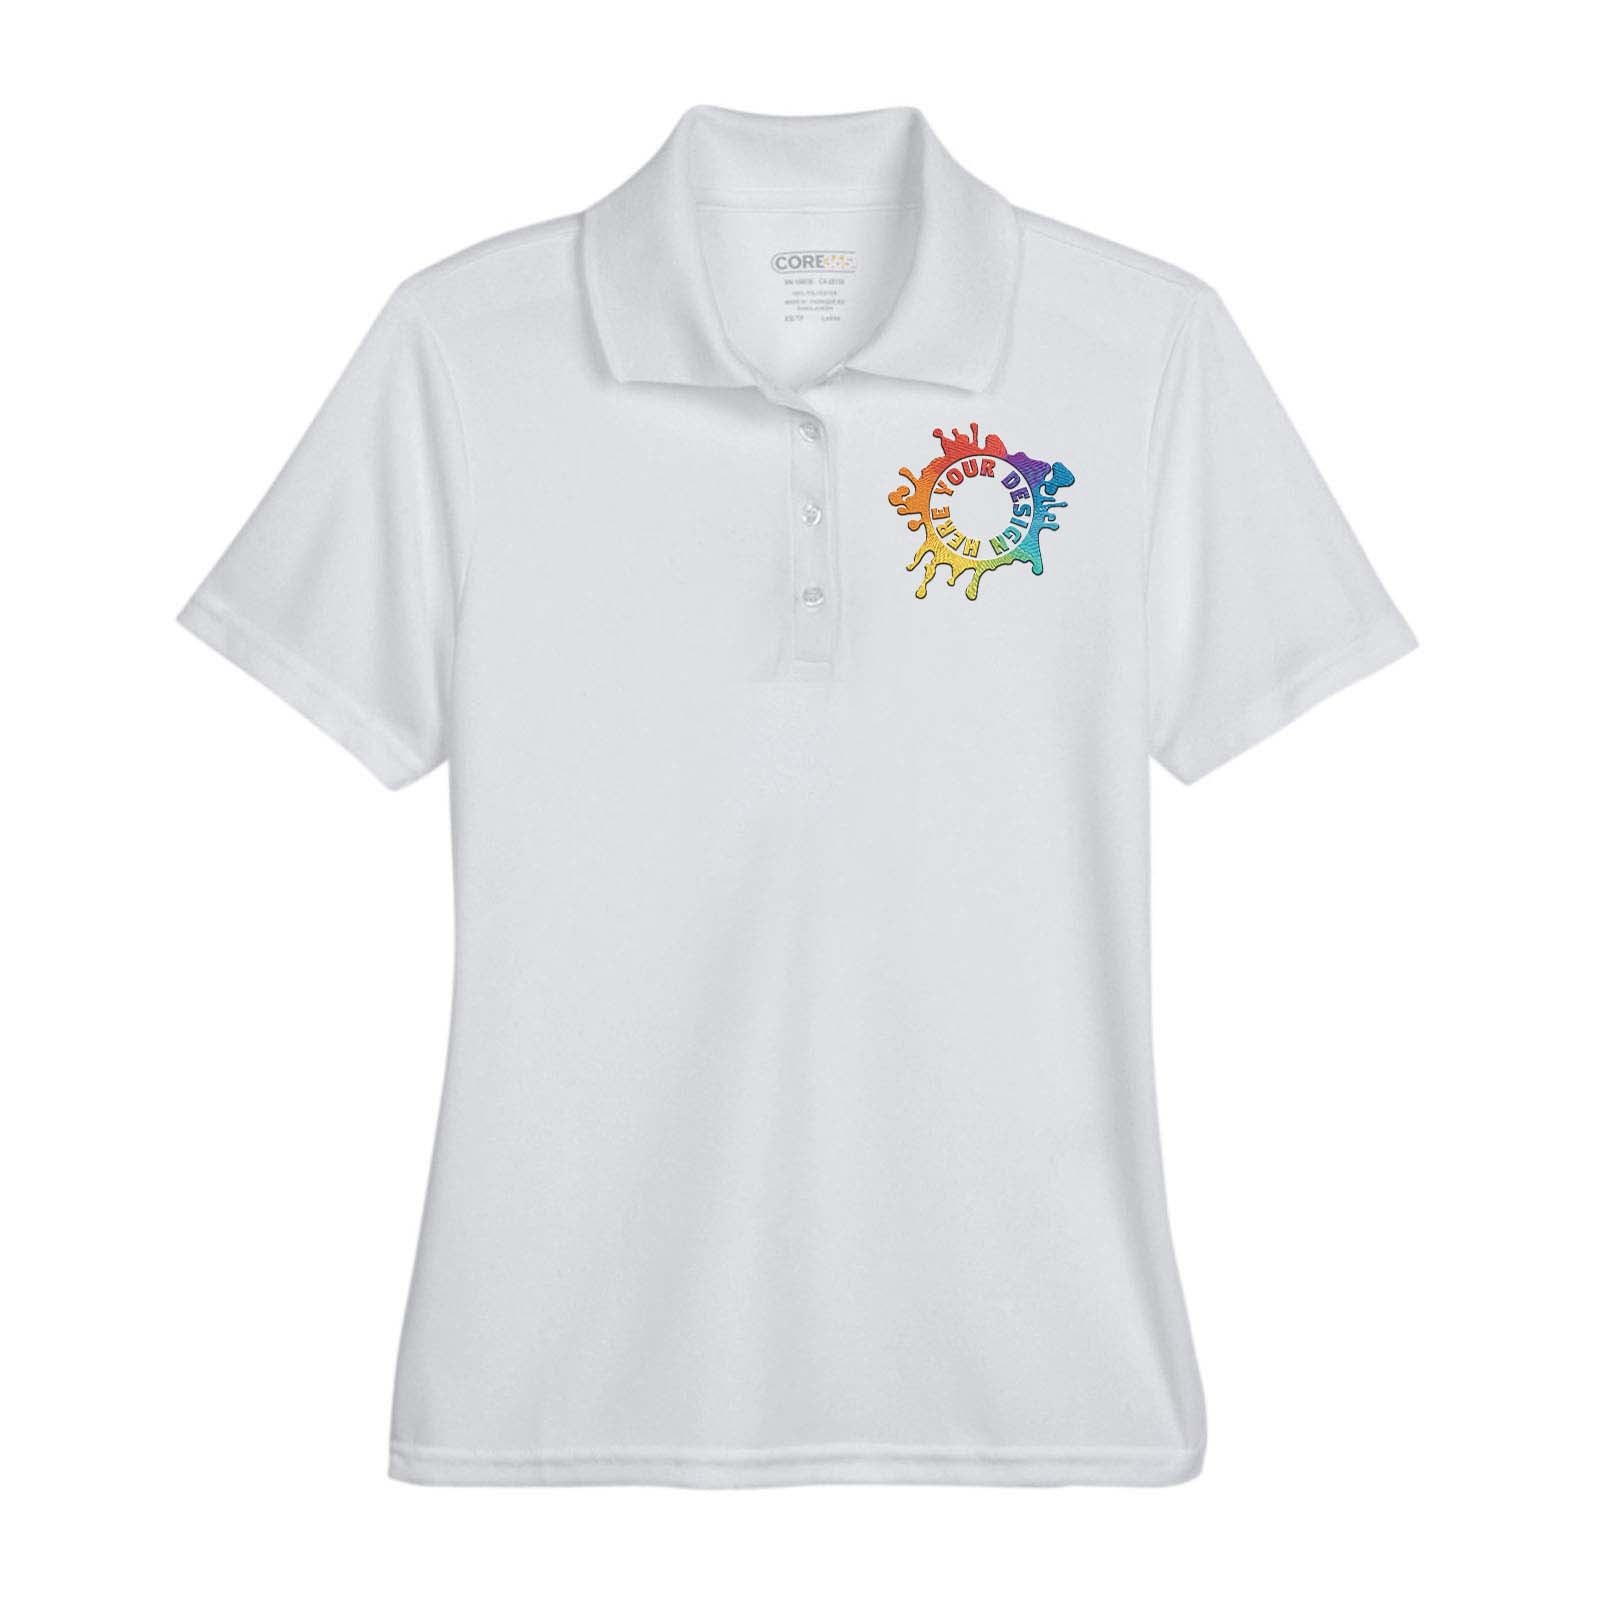 Core365 Ladies' Origin Performance 100% Polyester Piqué Polo T-Shirt Embroidery - Mato & Hash